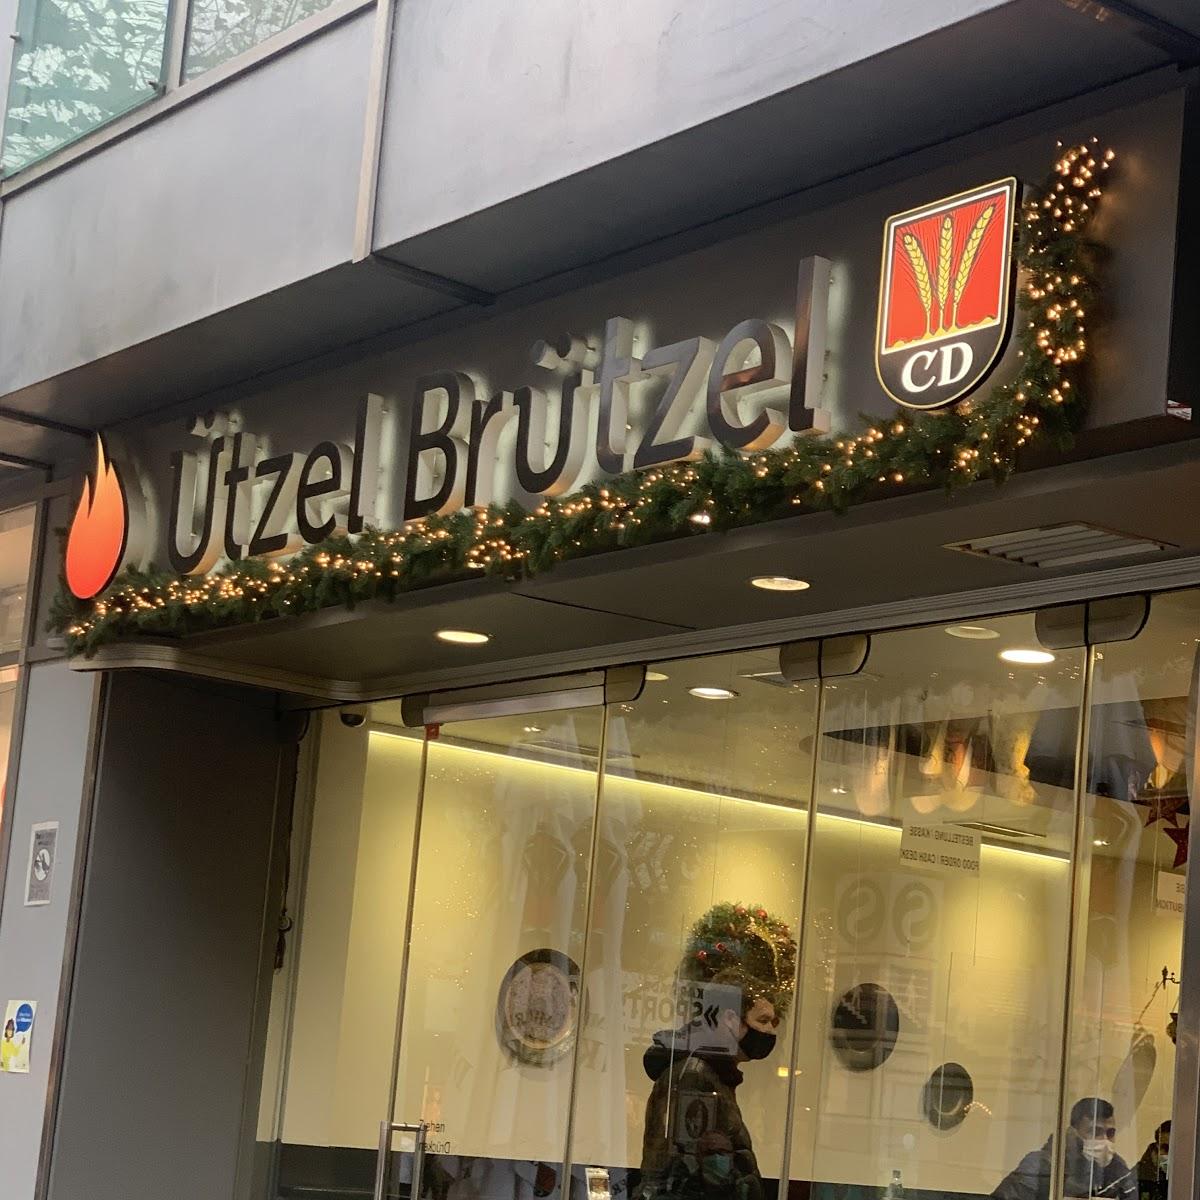 Restaurant "Ützel Brützel" in Stuttgart